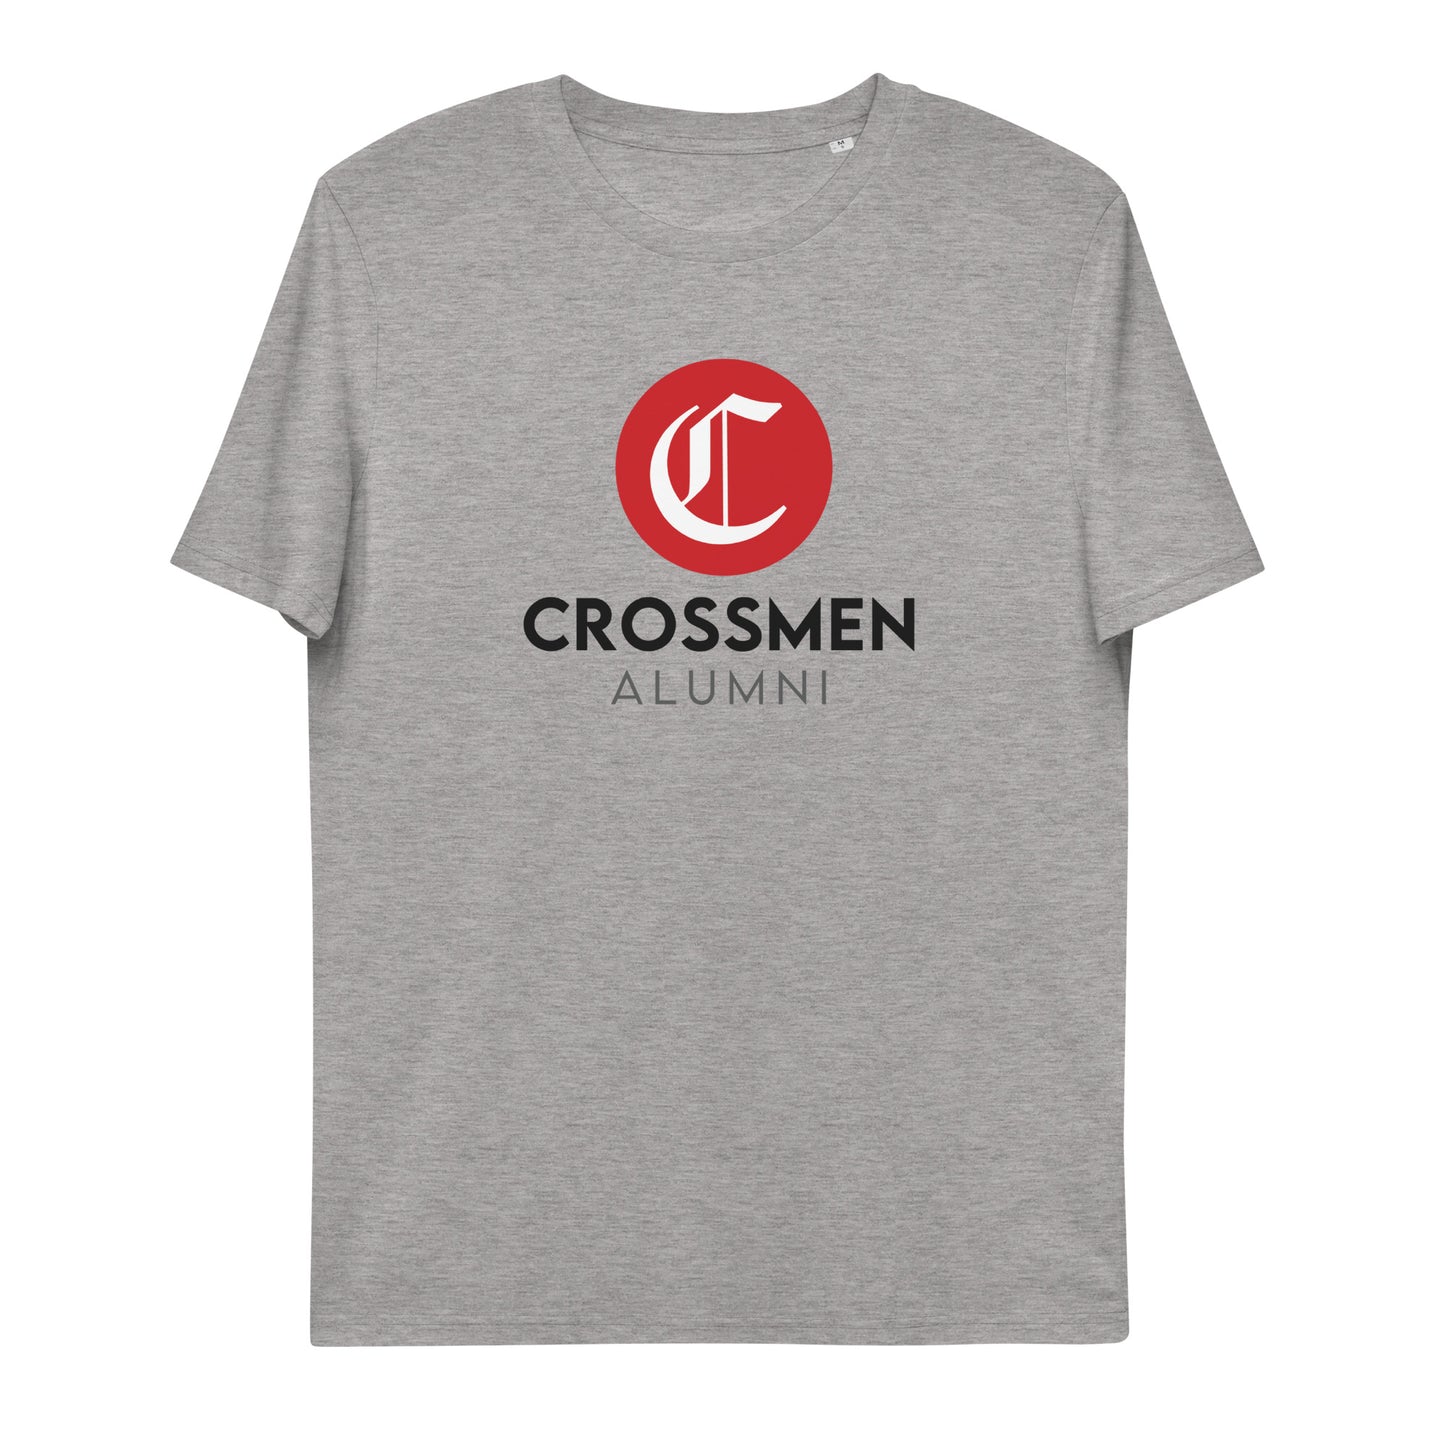 Crossmen Alumni Shirt